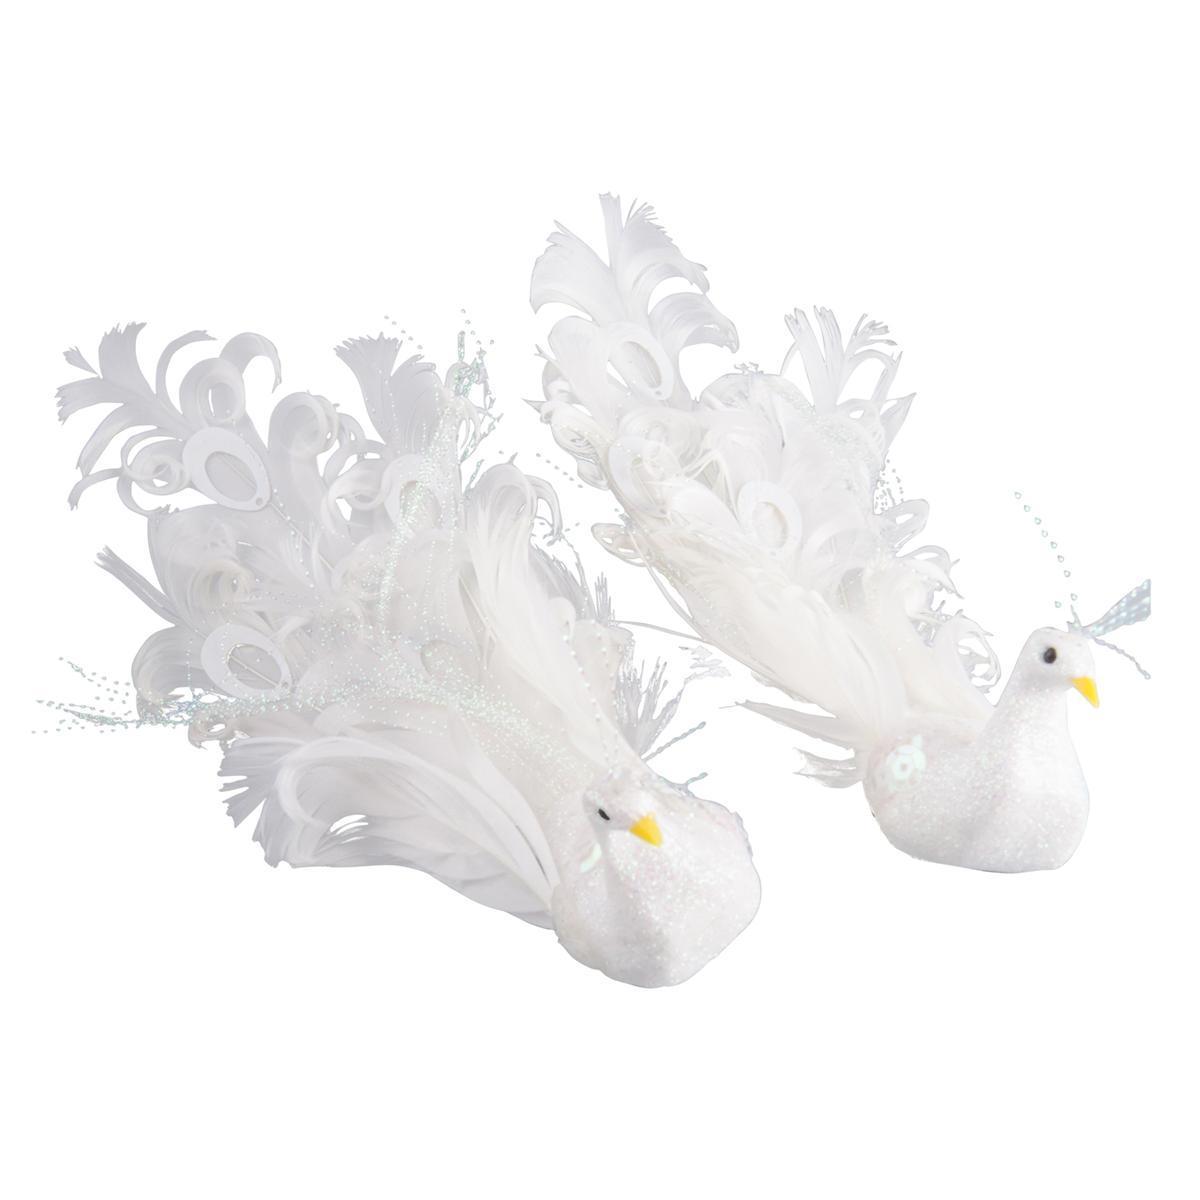 2 pinces colombe - Polystyrène et plumes - 21 cm - Blanc